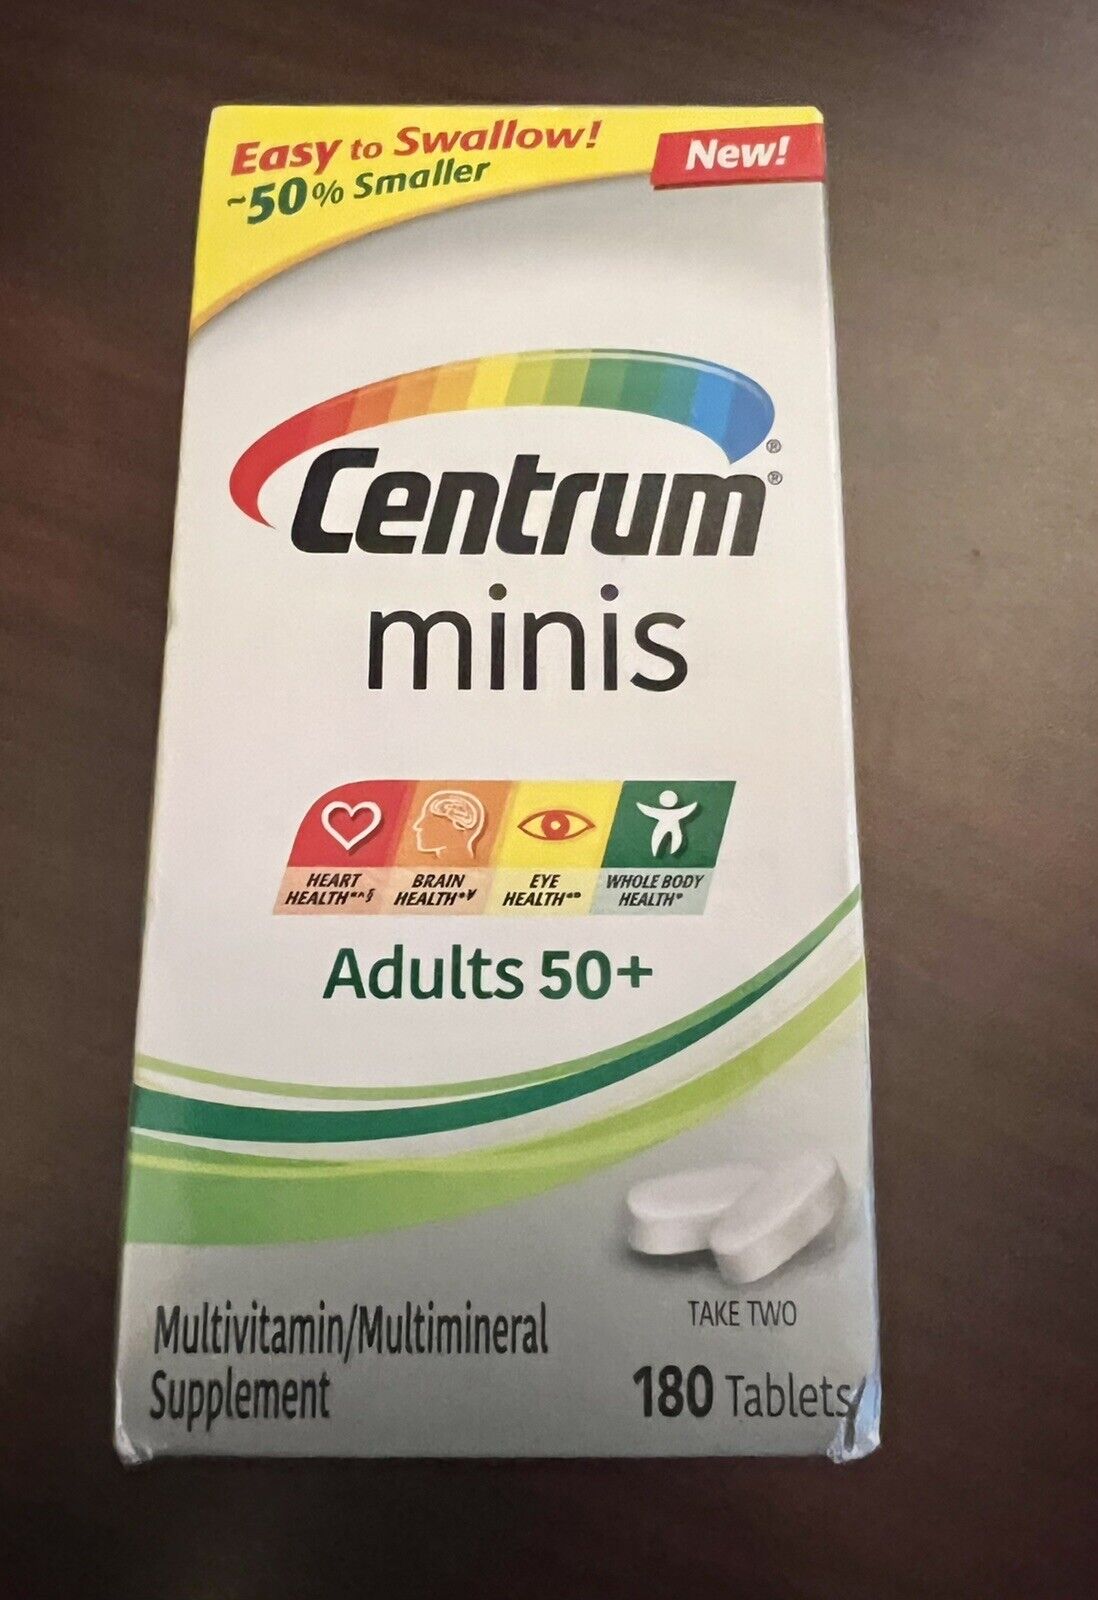 Centrum Minis Aduts 50+ Multivitamin Supplement 180 Tablets Exp 5/2022